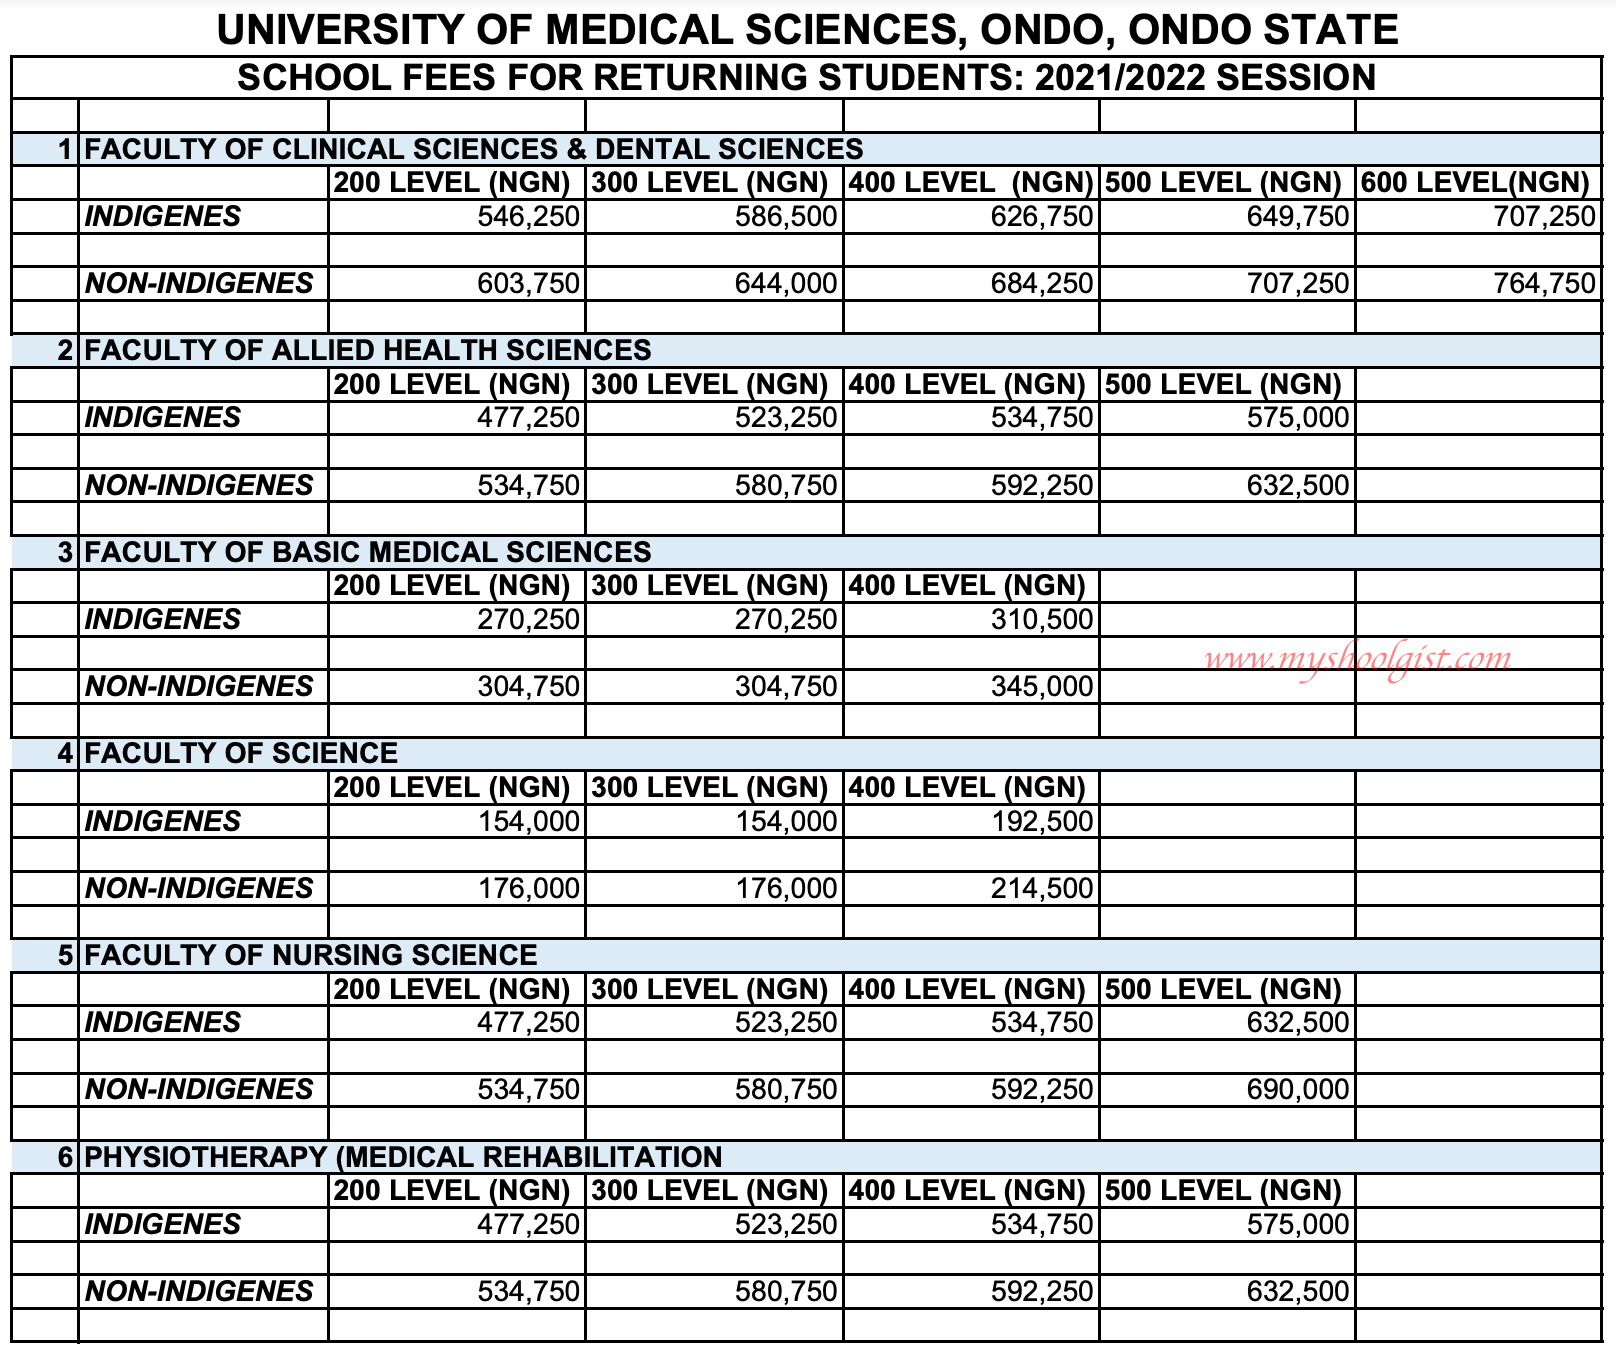 UNIMED returning students school fees